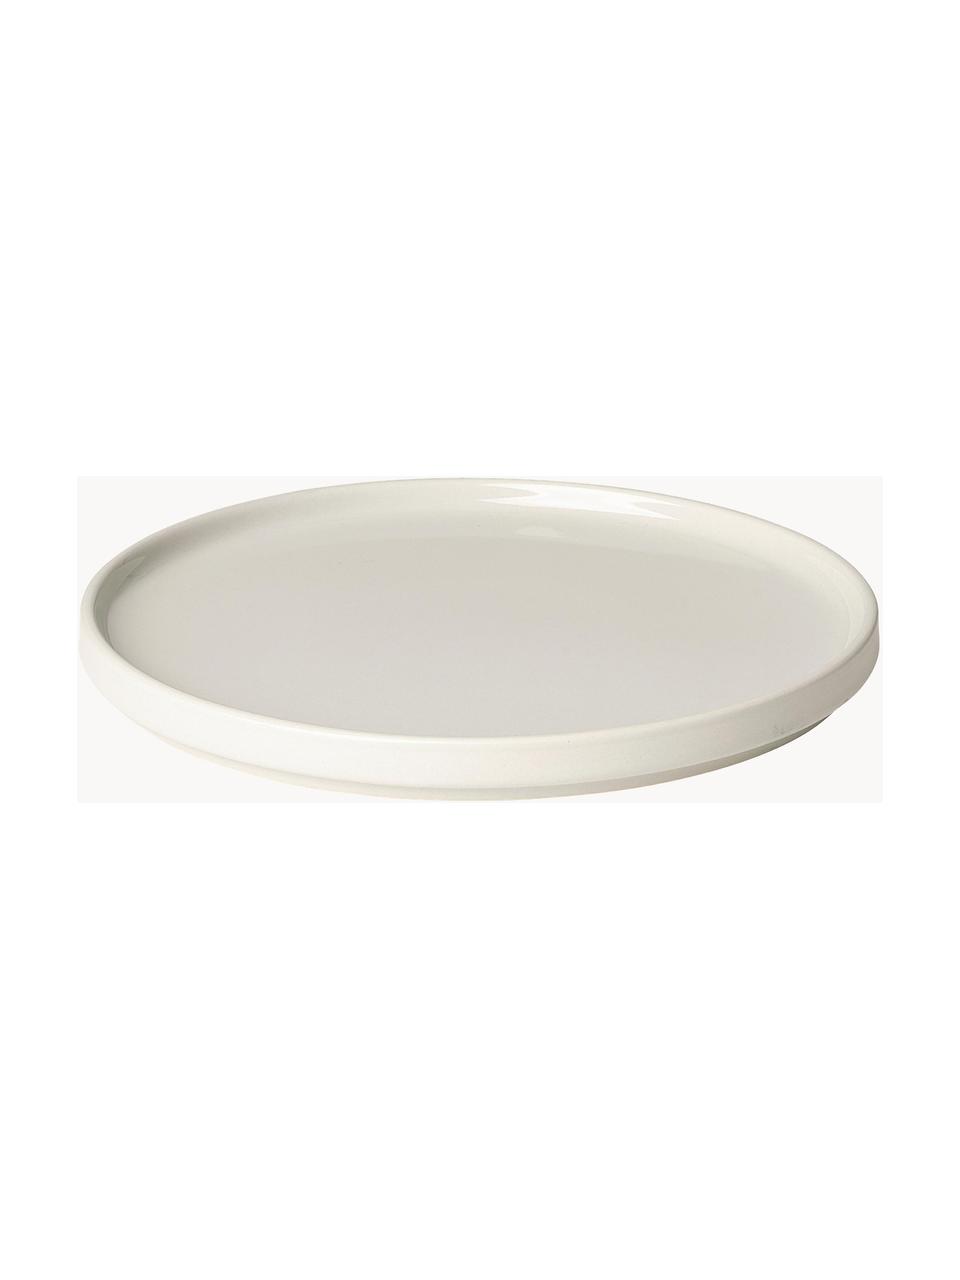 Snídaňový talíř Pilar, 6 ks, Keramika, Krémově bílá, Ø 20 cm